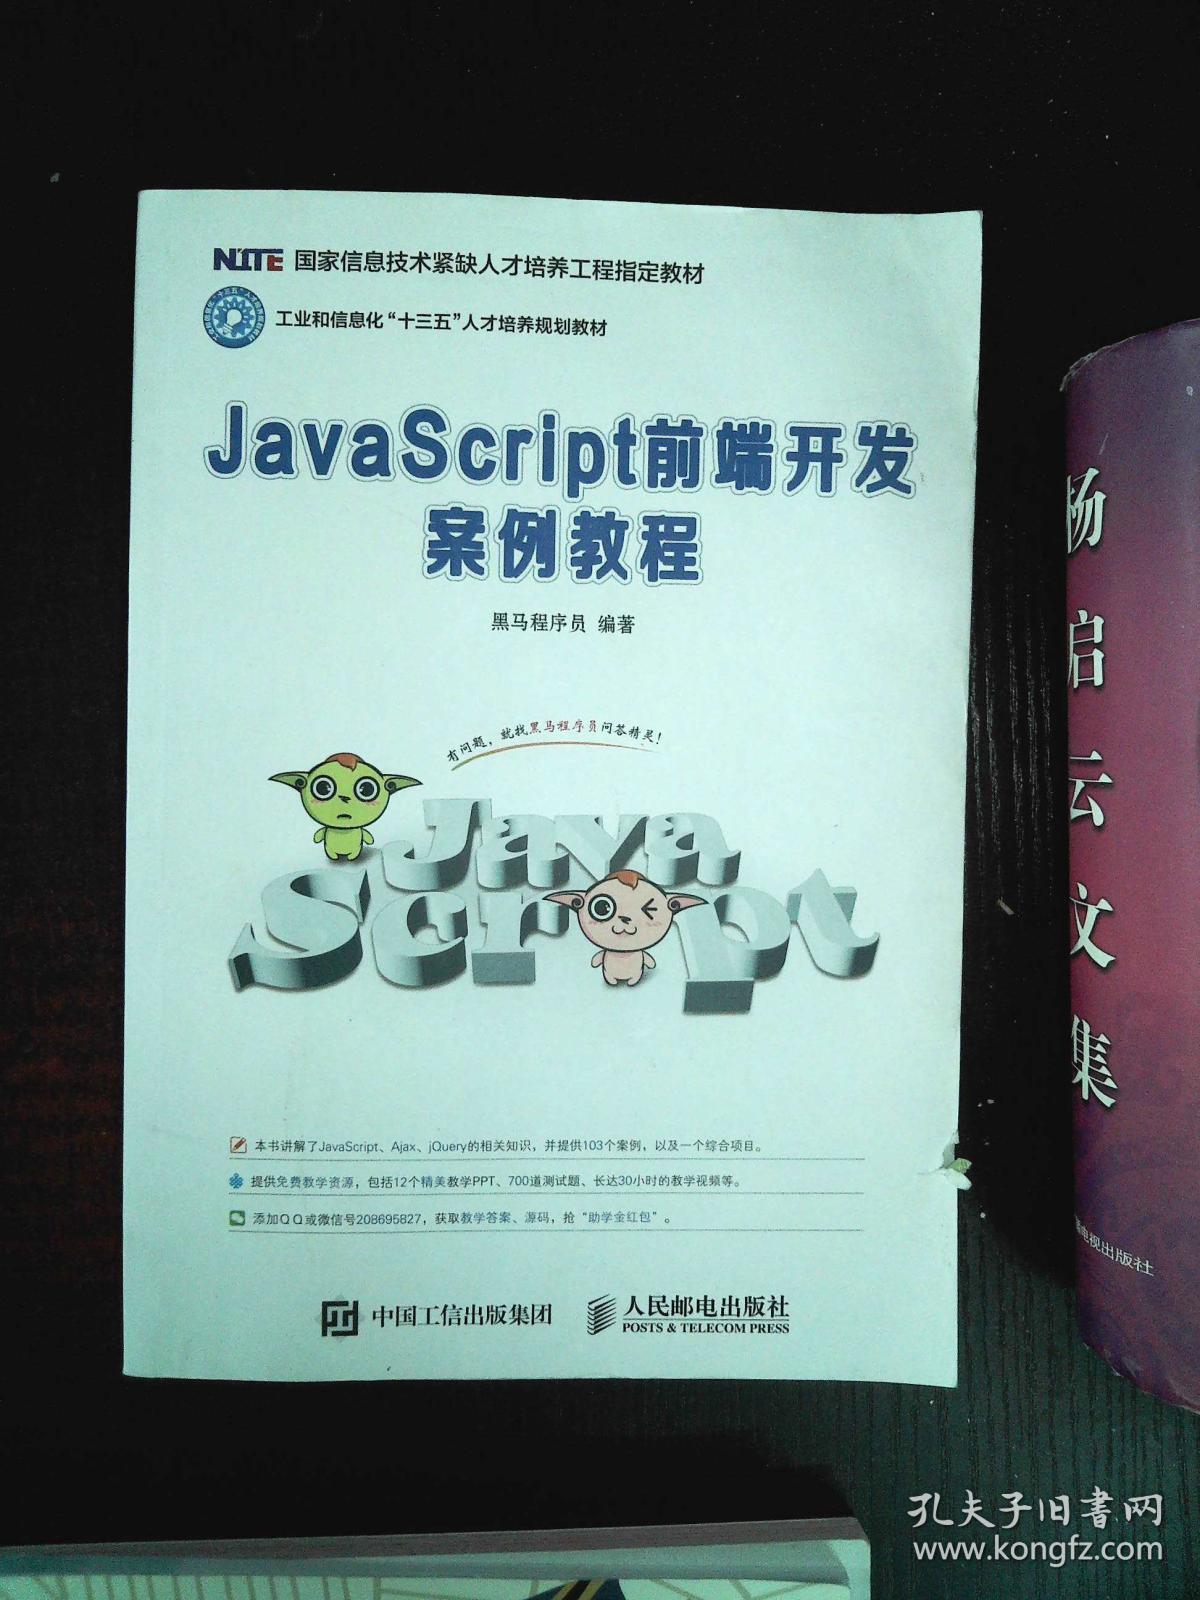 JavaScript前端开发案例教程